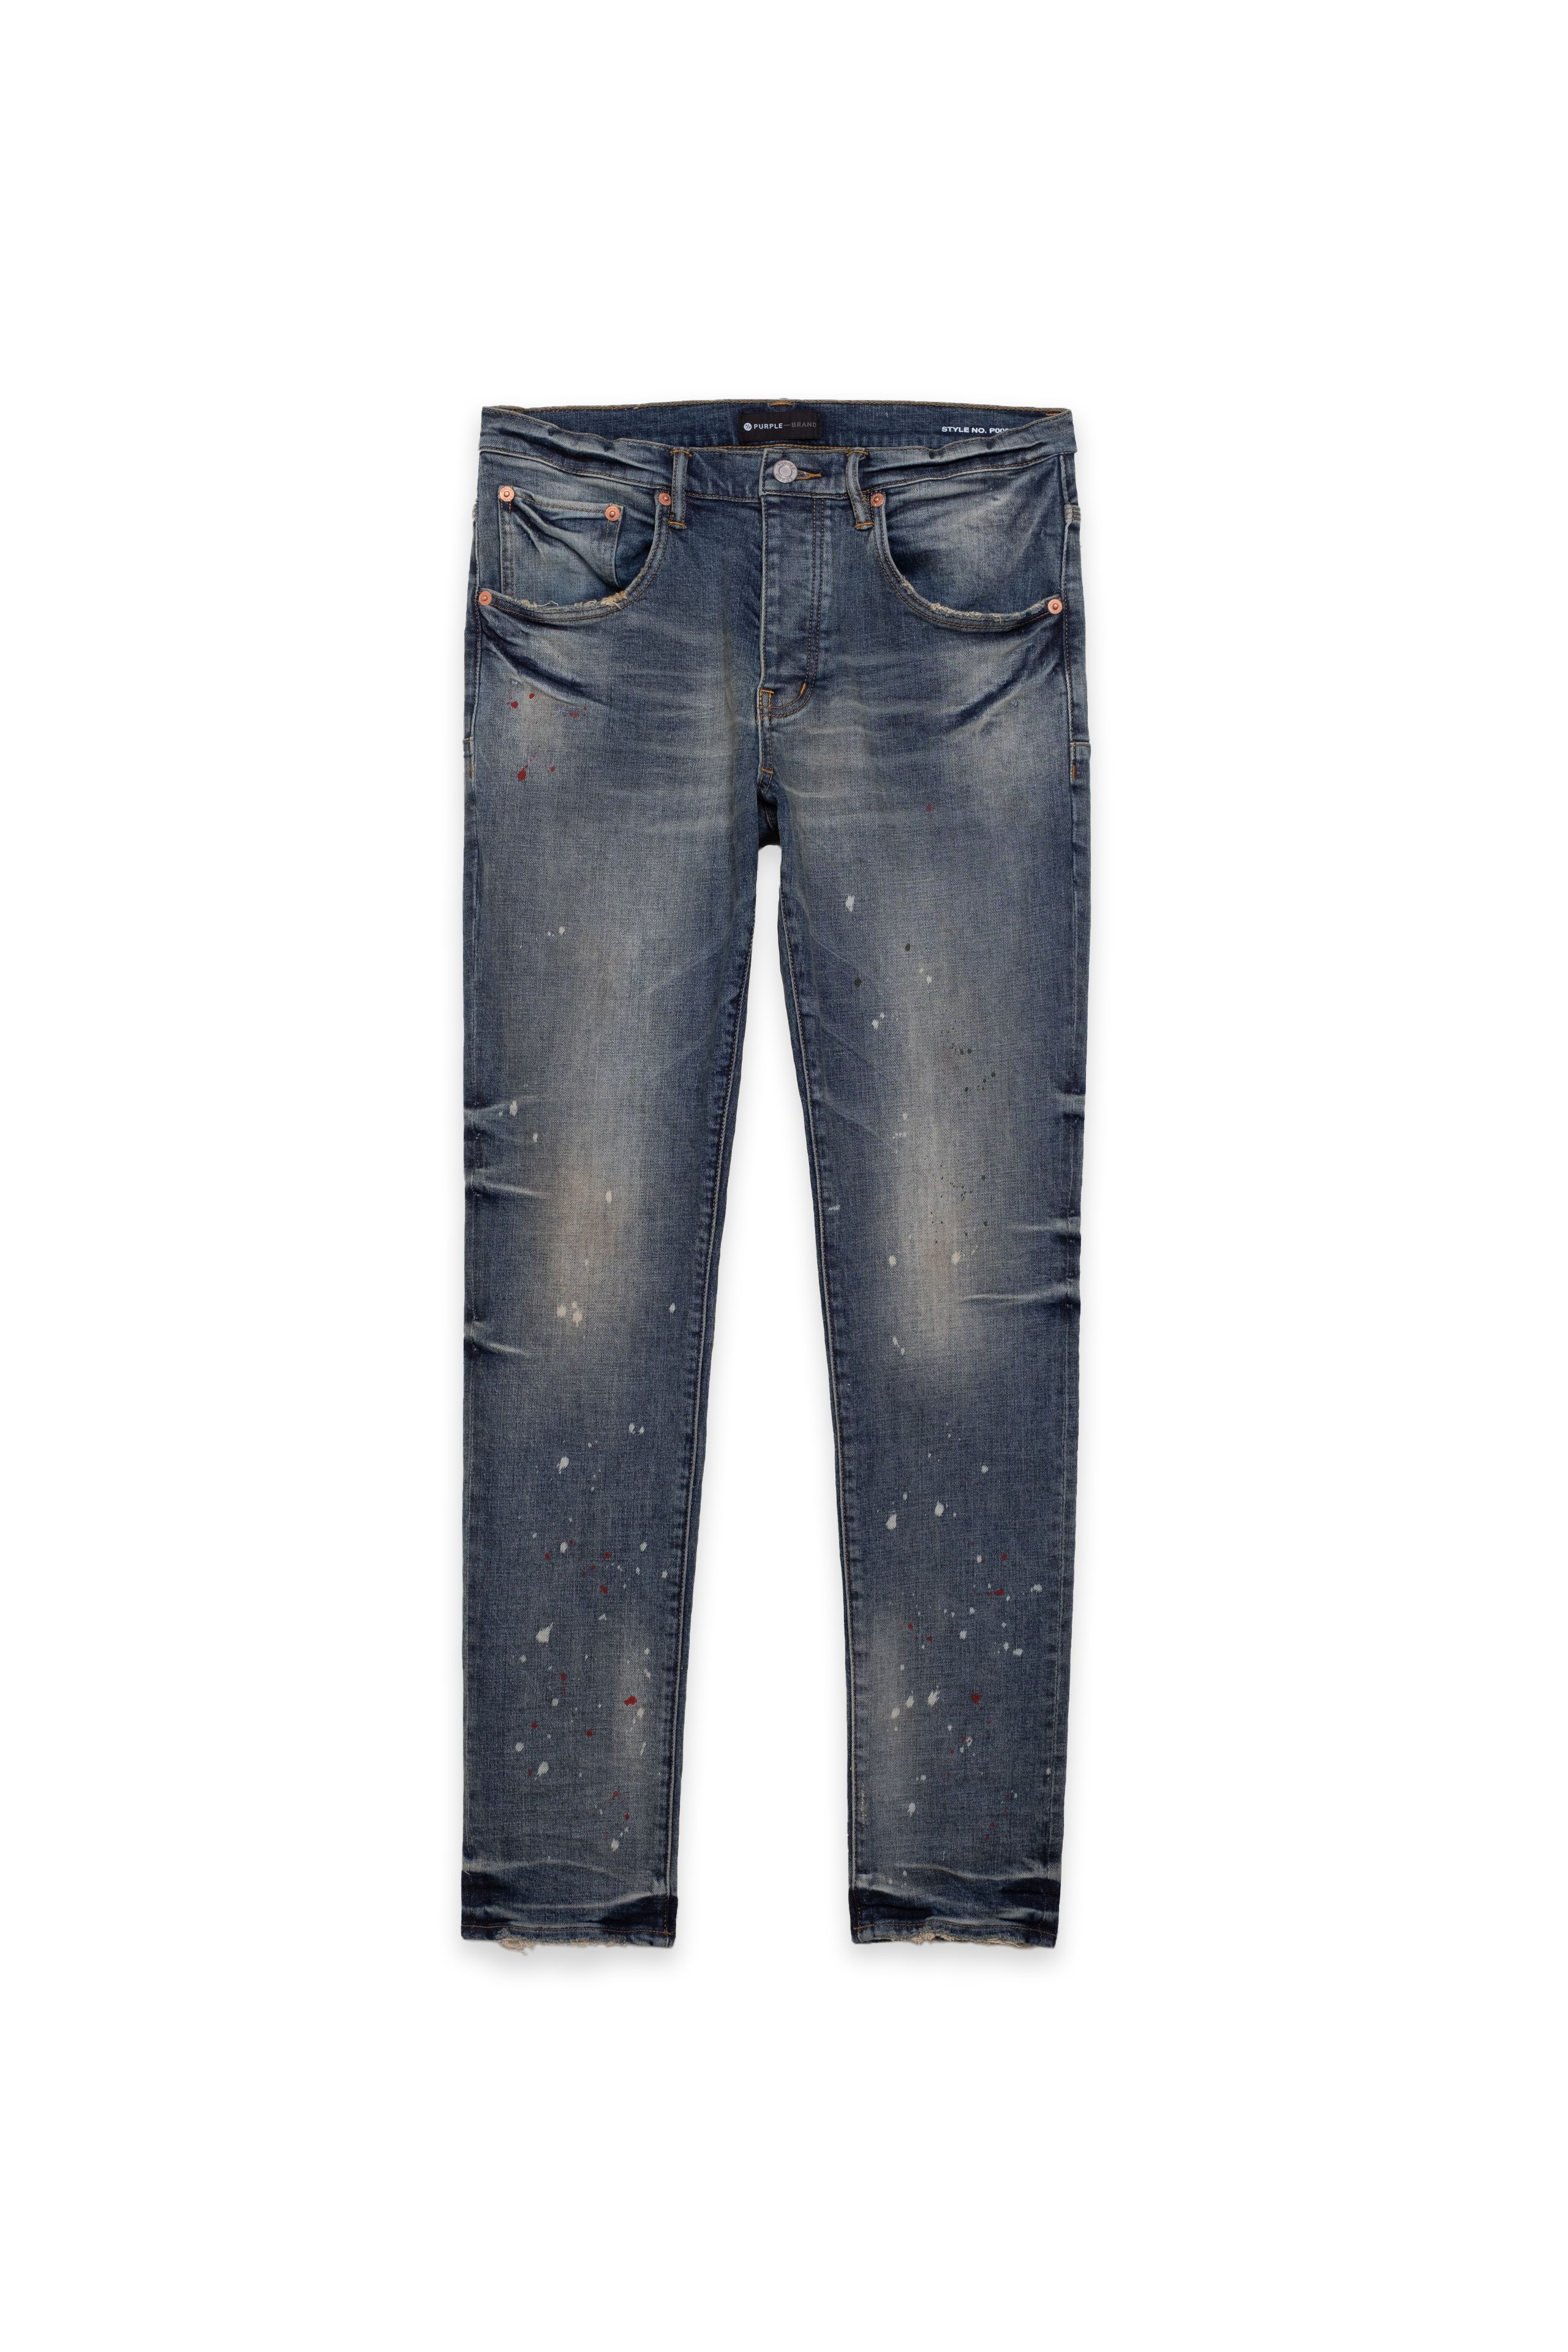 Purple Brand Jeans Drop Fit Mid Rise Slim Leg P002 Black Fade Men’s Sz 33  $295 